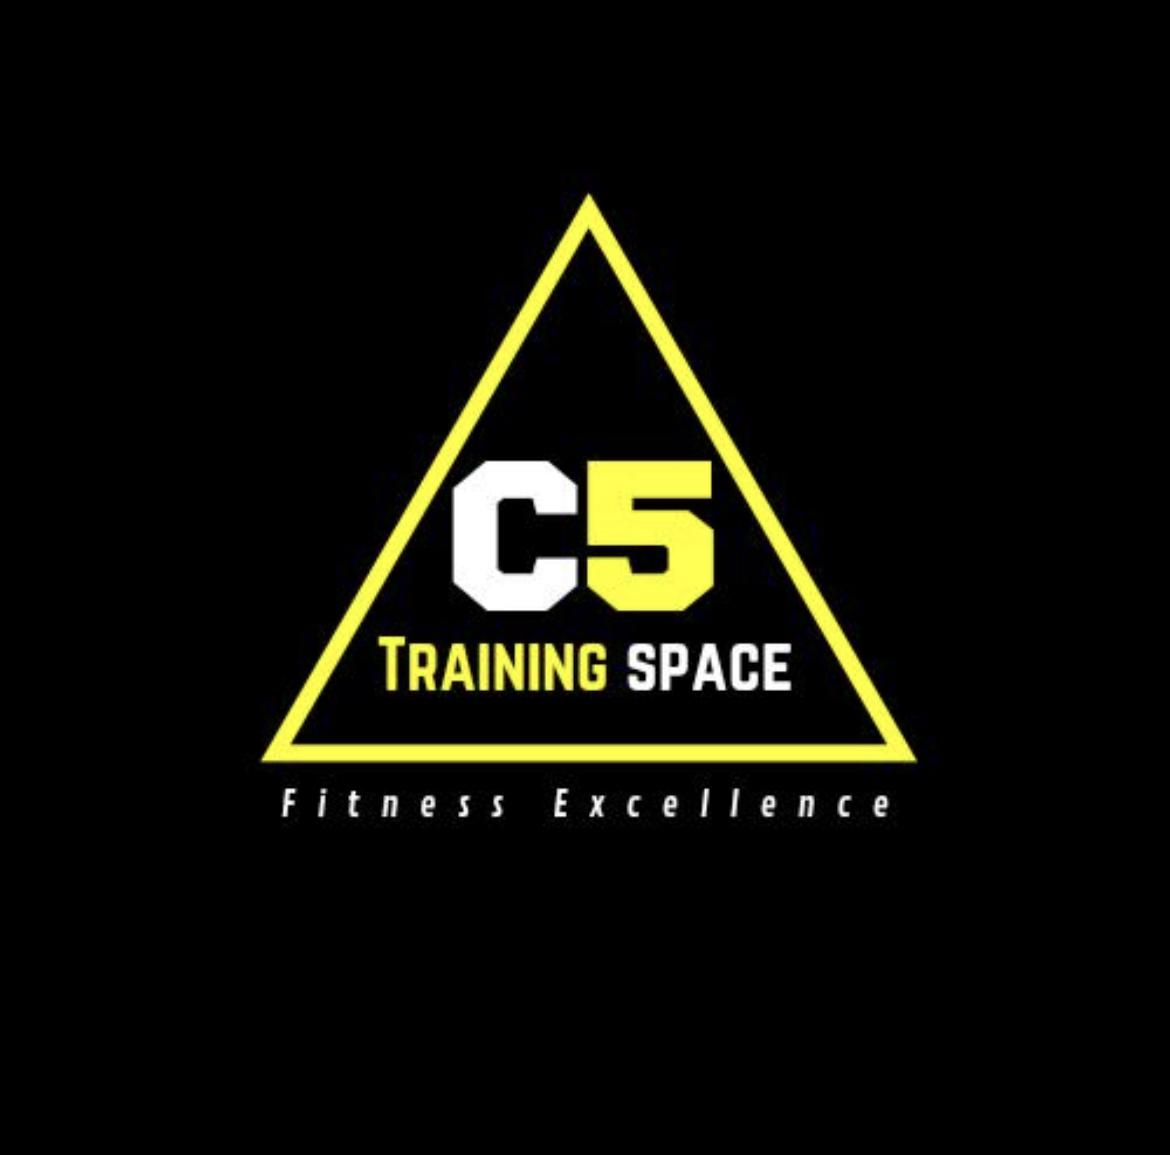 C5 Training Space Logo